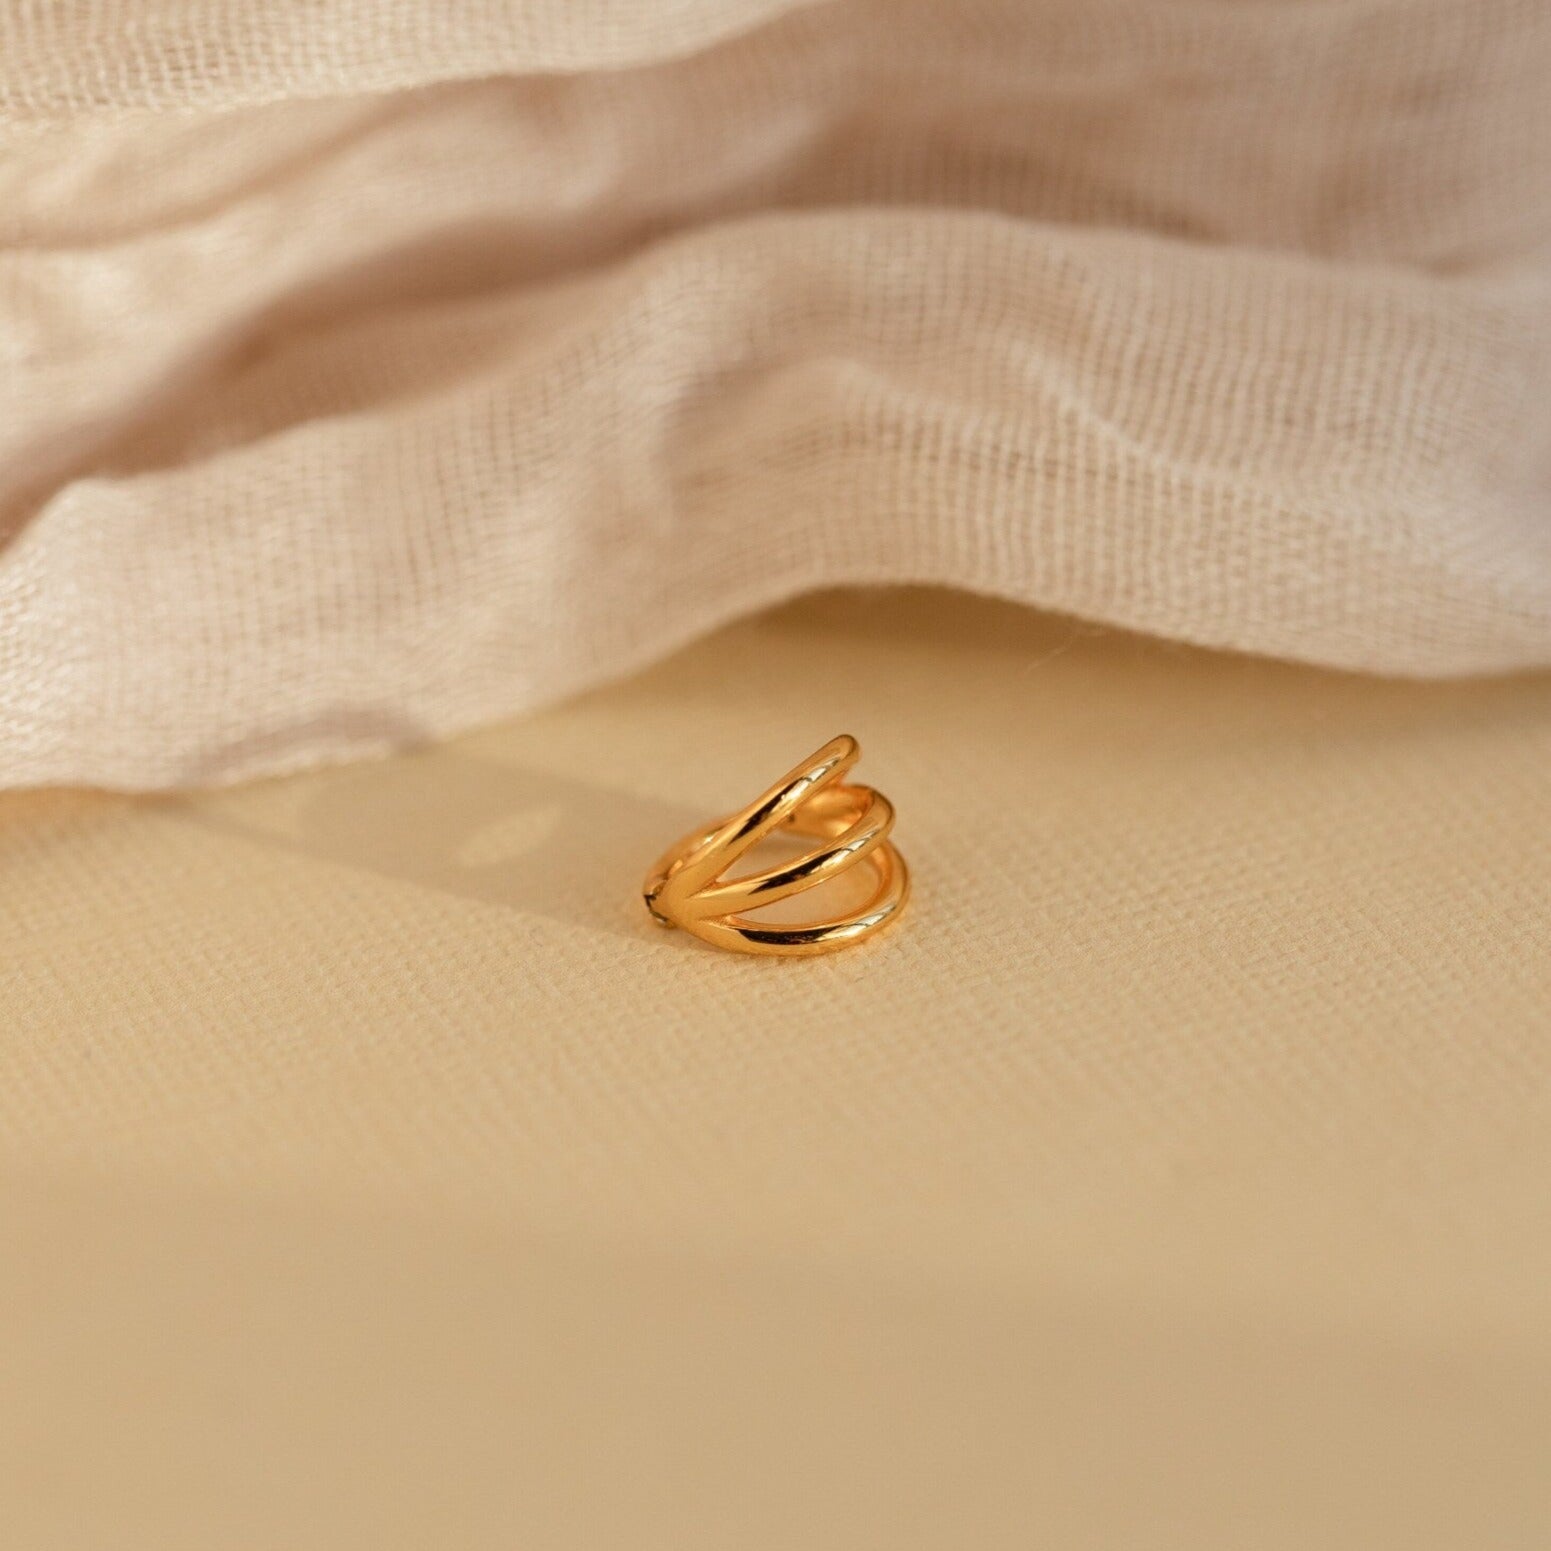 Plain gold nose ring design/fancy gold nose ring #gold - YouTube